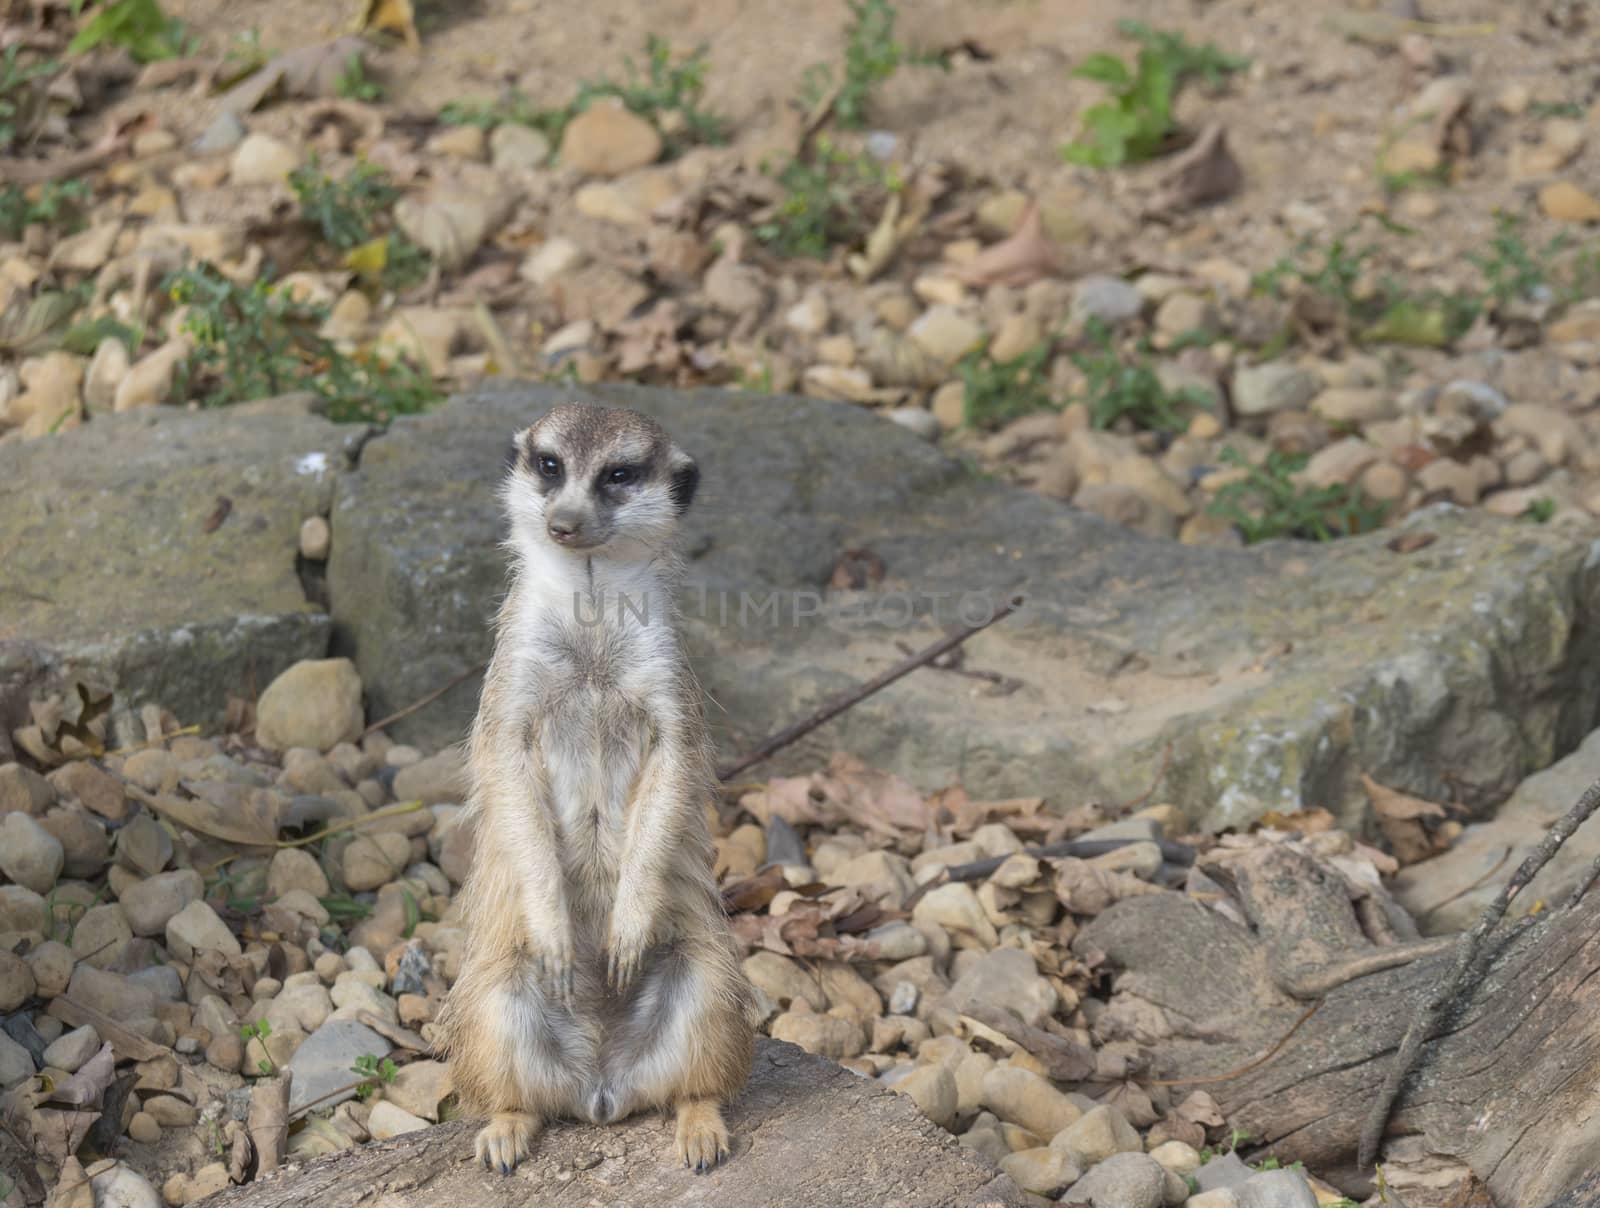 Close up standing meerkat or suricate, Suricata suricatta looking up, selective focus, copy space for text.